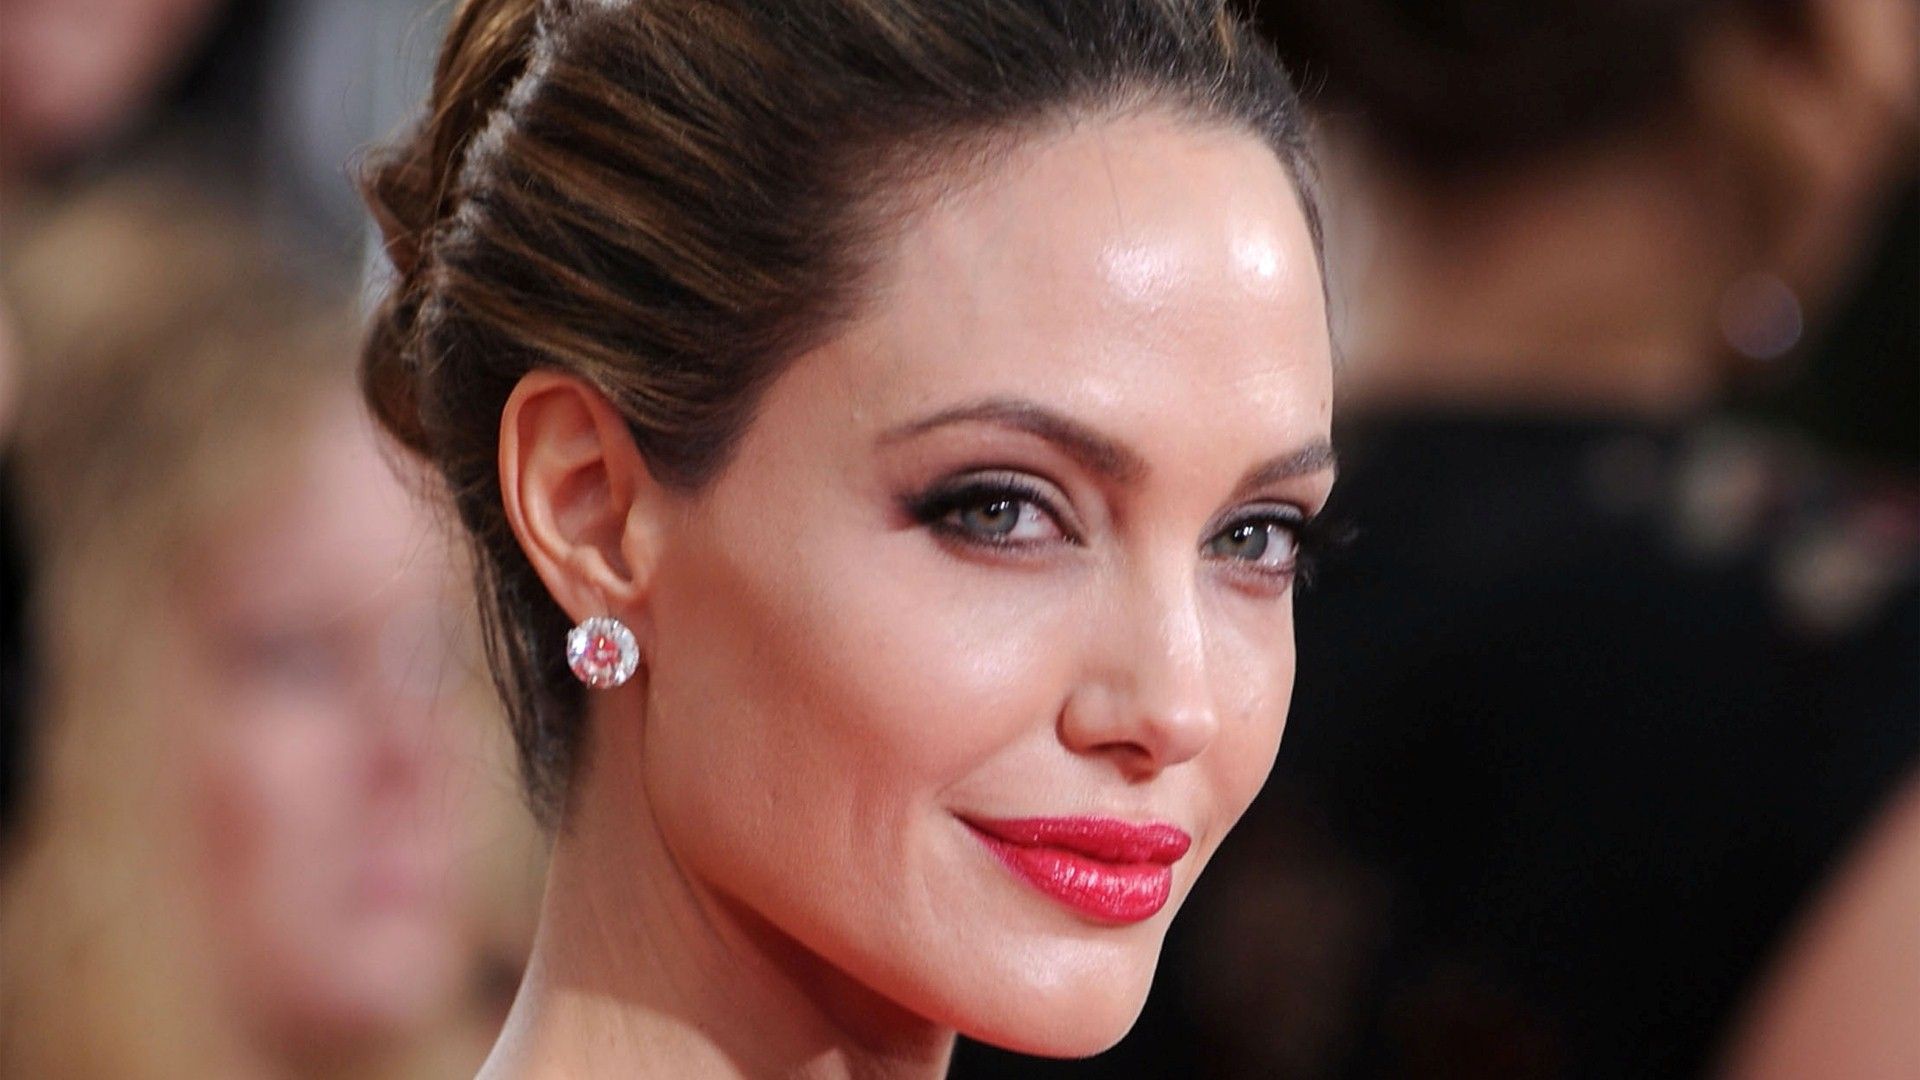 Angelina Jolie has received how many Academy Awards? 